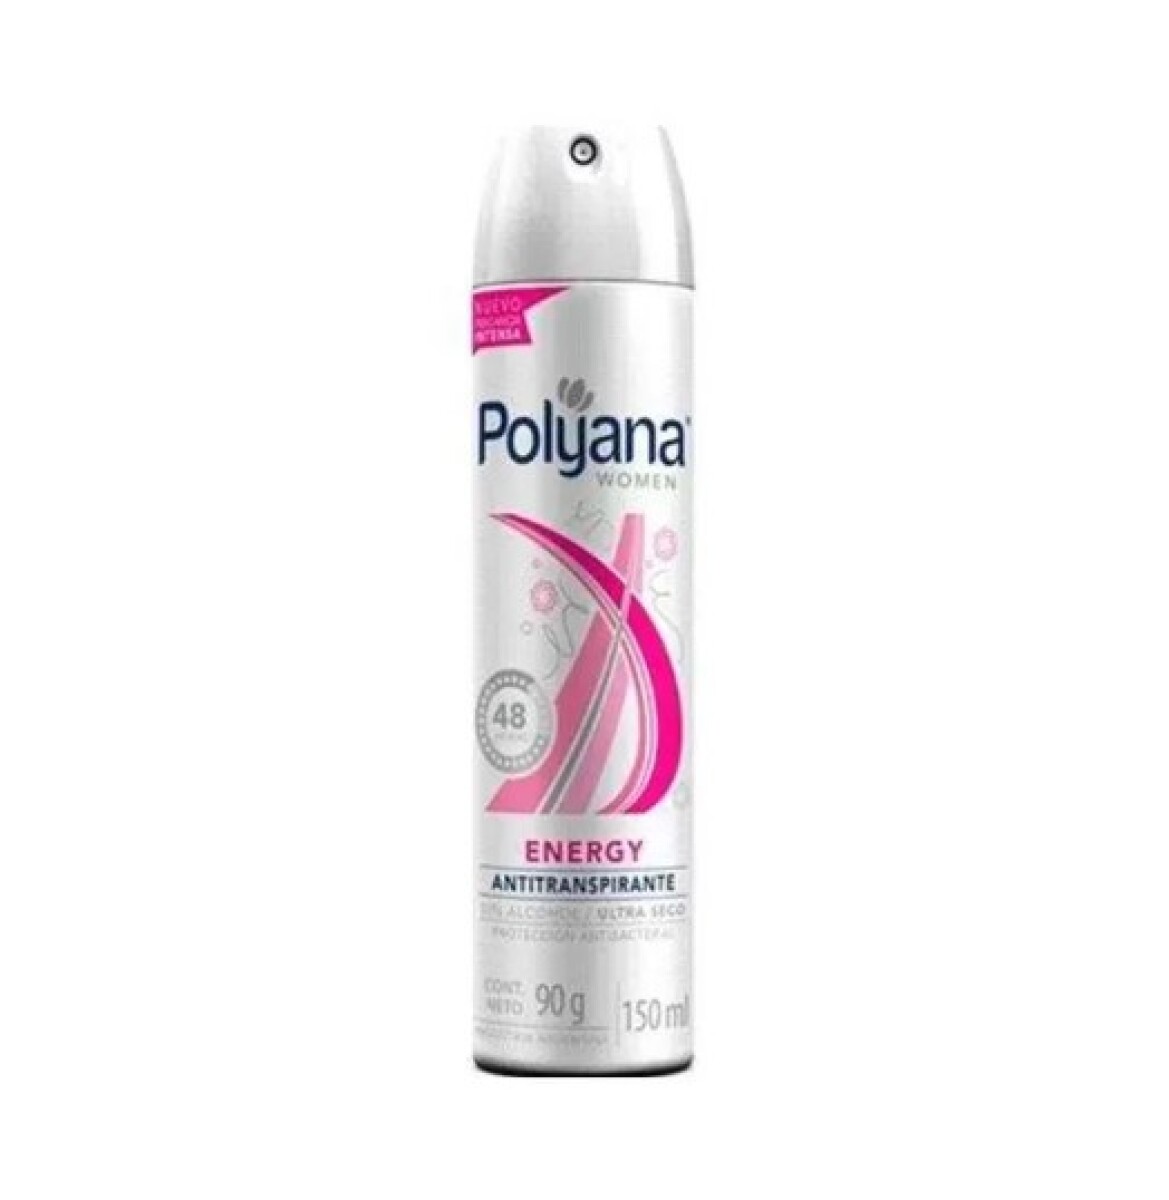 Polyana Antitranspirante aerosol 172 ml - Energy woman 